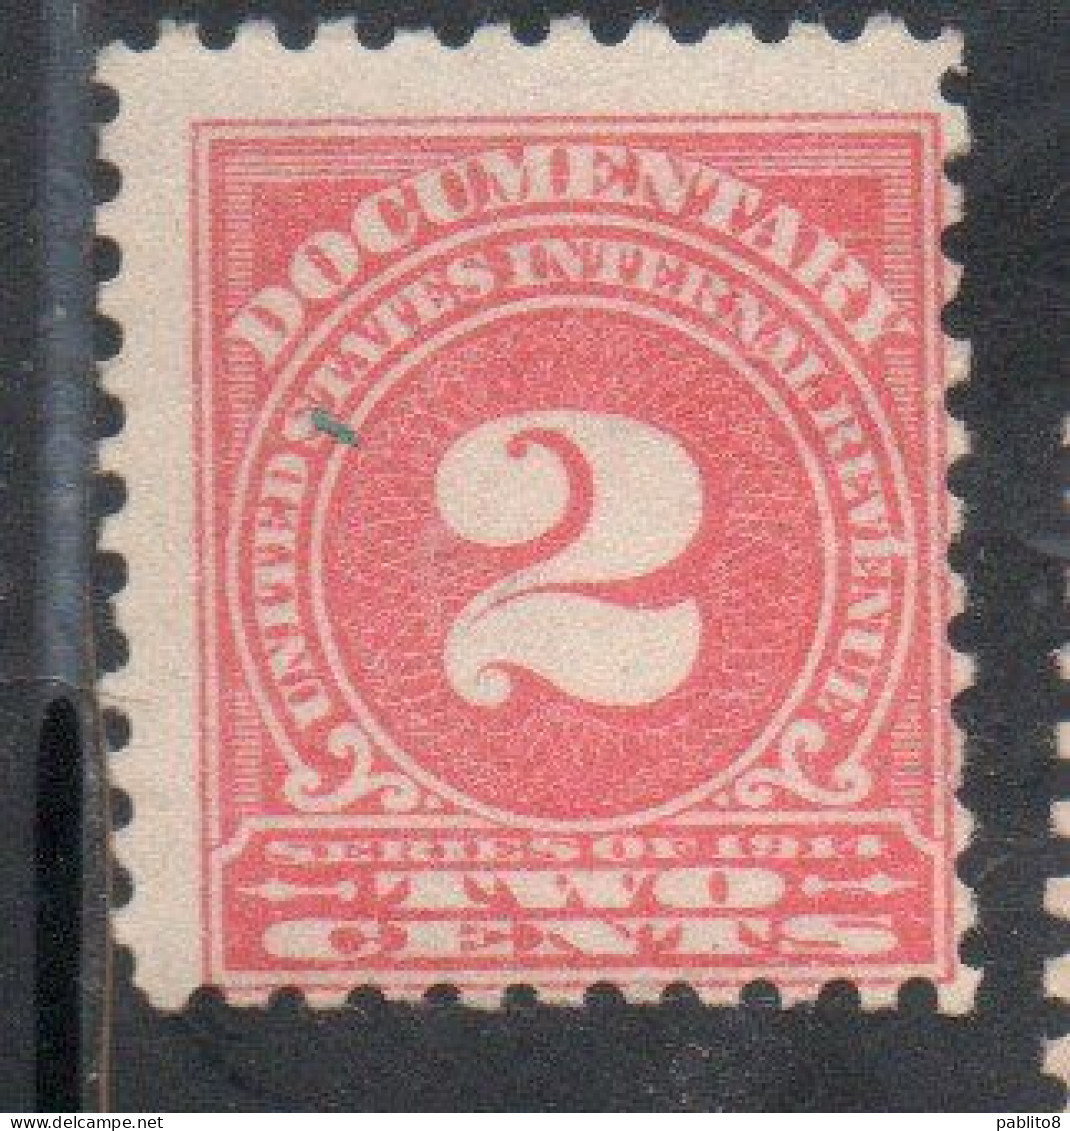 USA STATI UNITI 1914 REVENUE STAMPS DOCUMENTARY 2c MNH - Unused Stamps